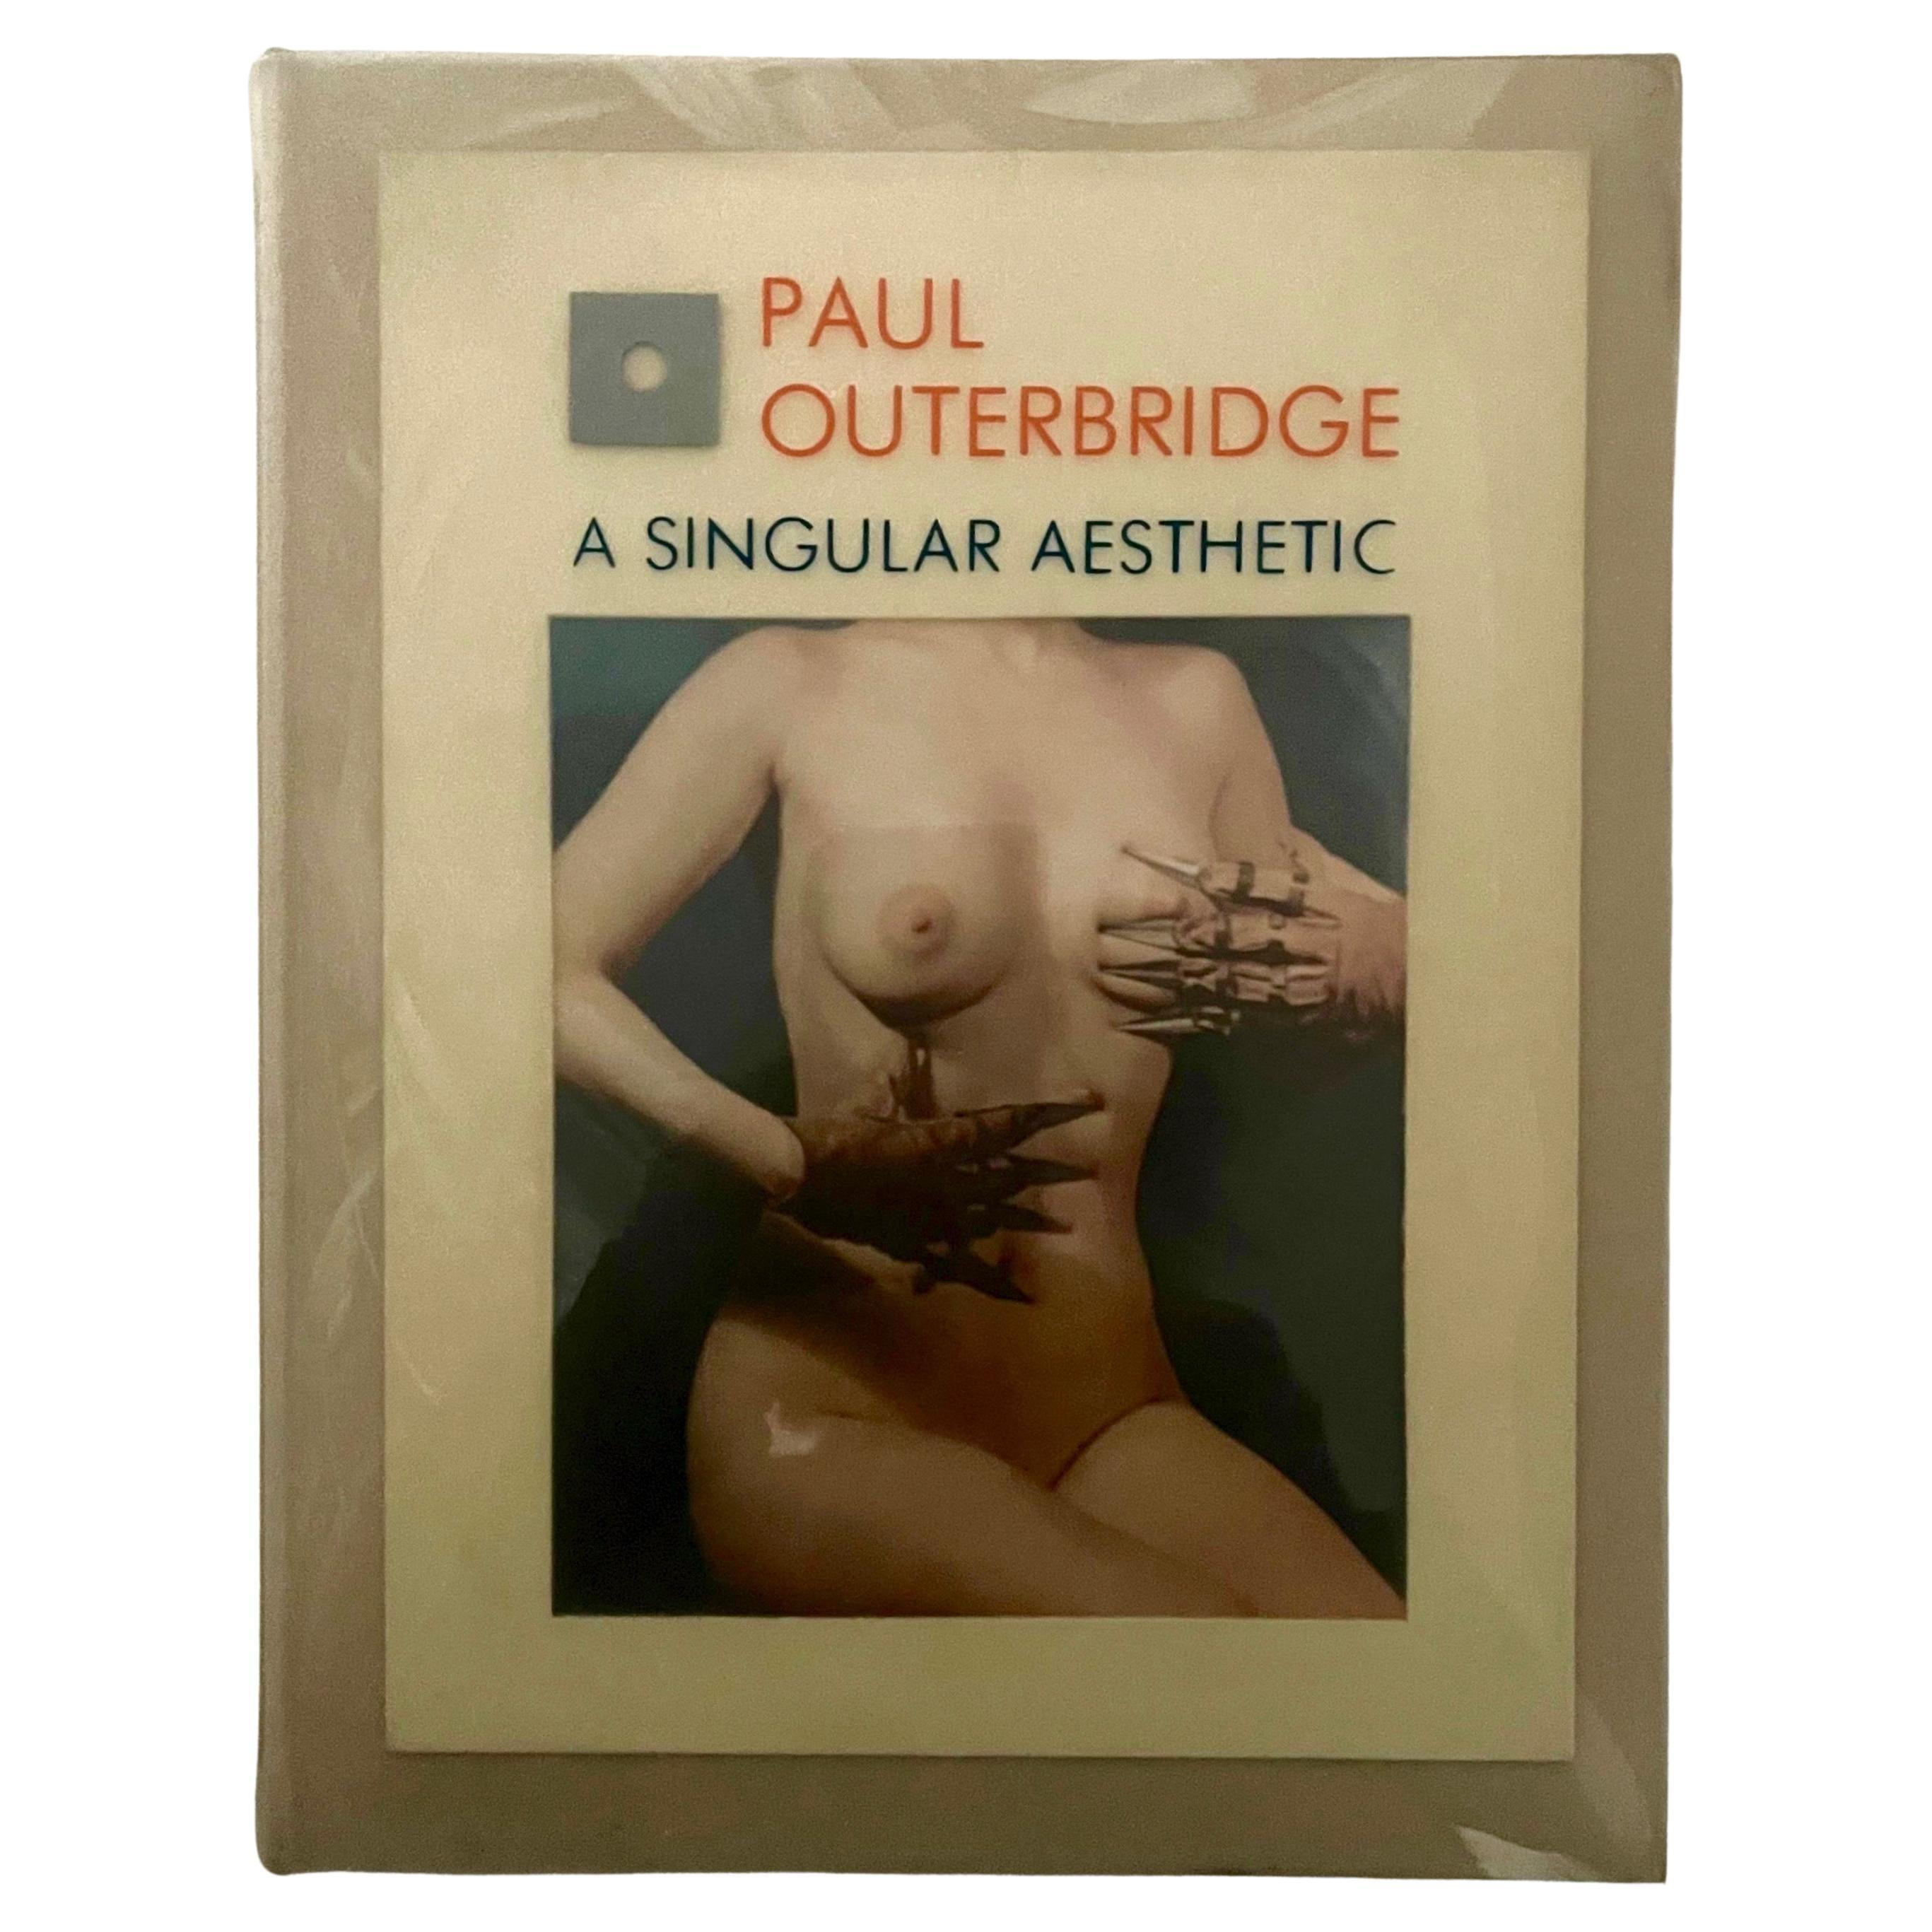 Paul Outerbridge: A Singular Aesthetic - Elaine Dines - 1st ed, 1981 For Sale